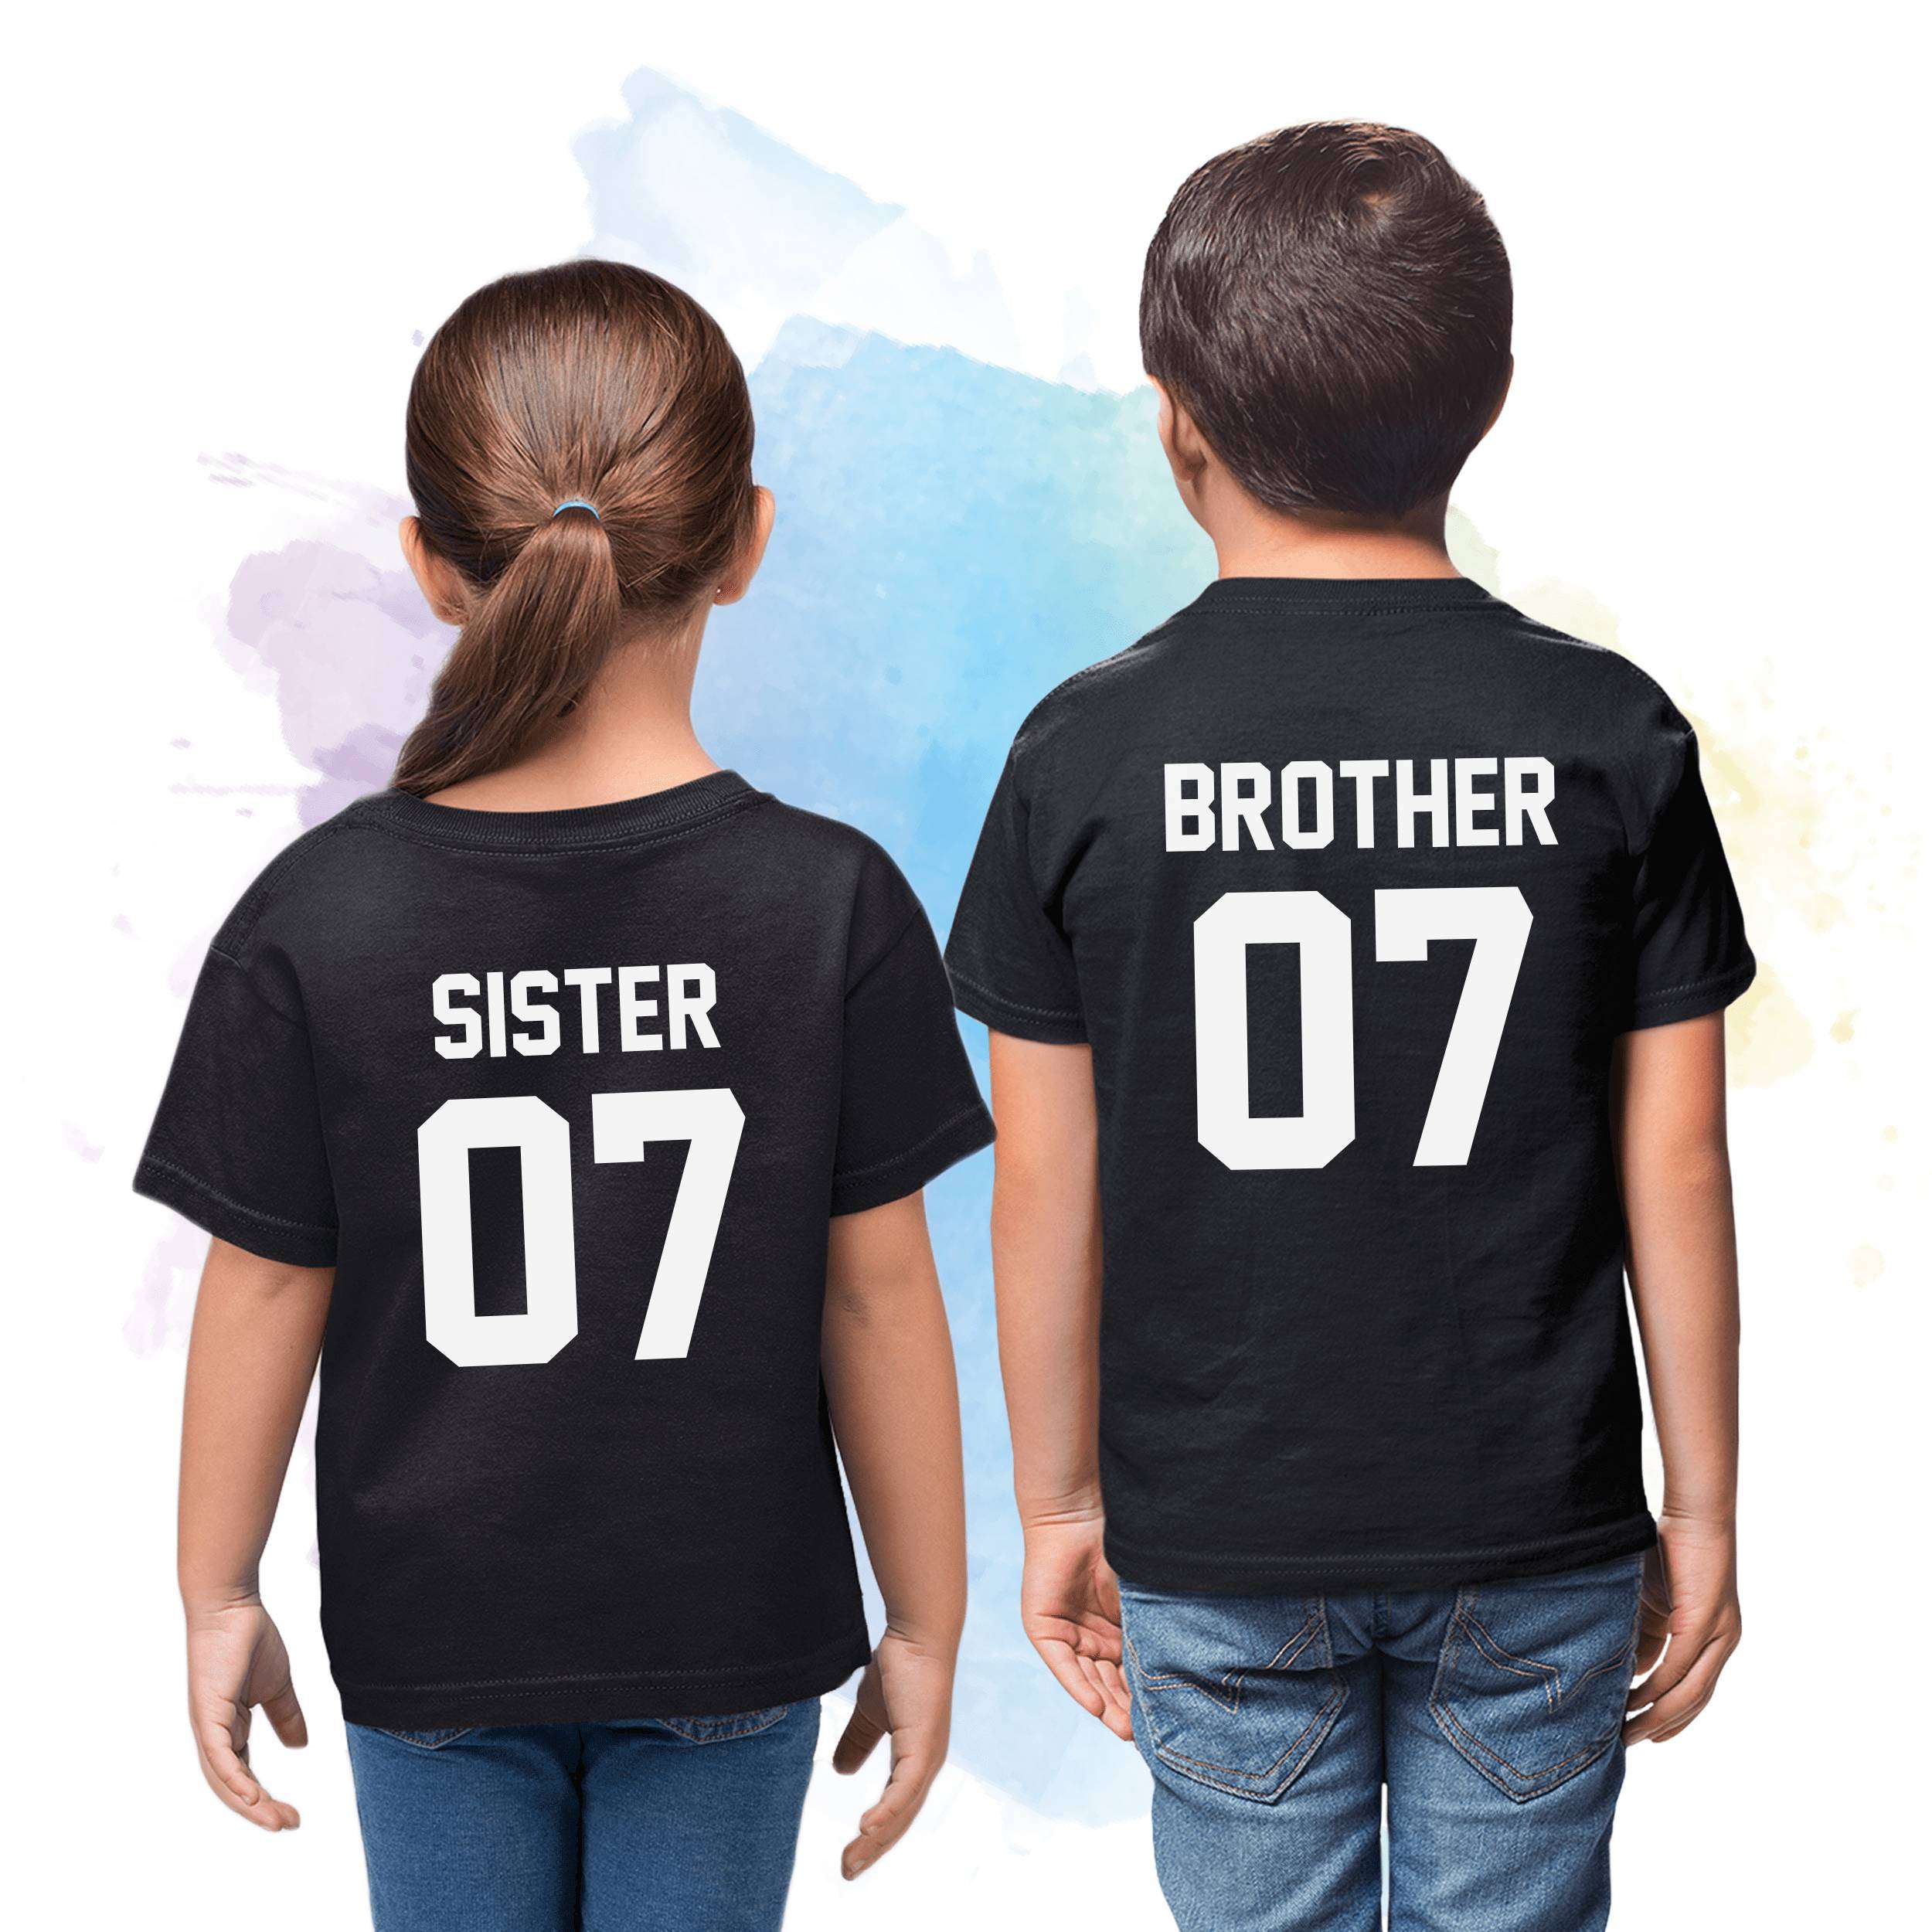 N brothers. Fb sister футболка сетка. Бро одежда.